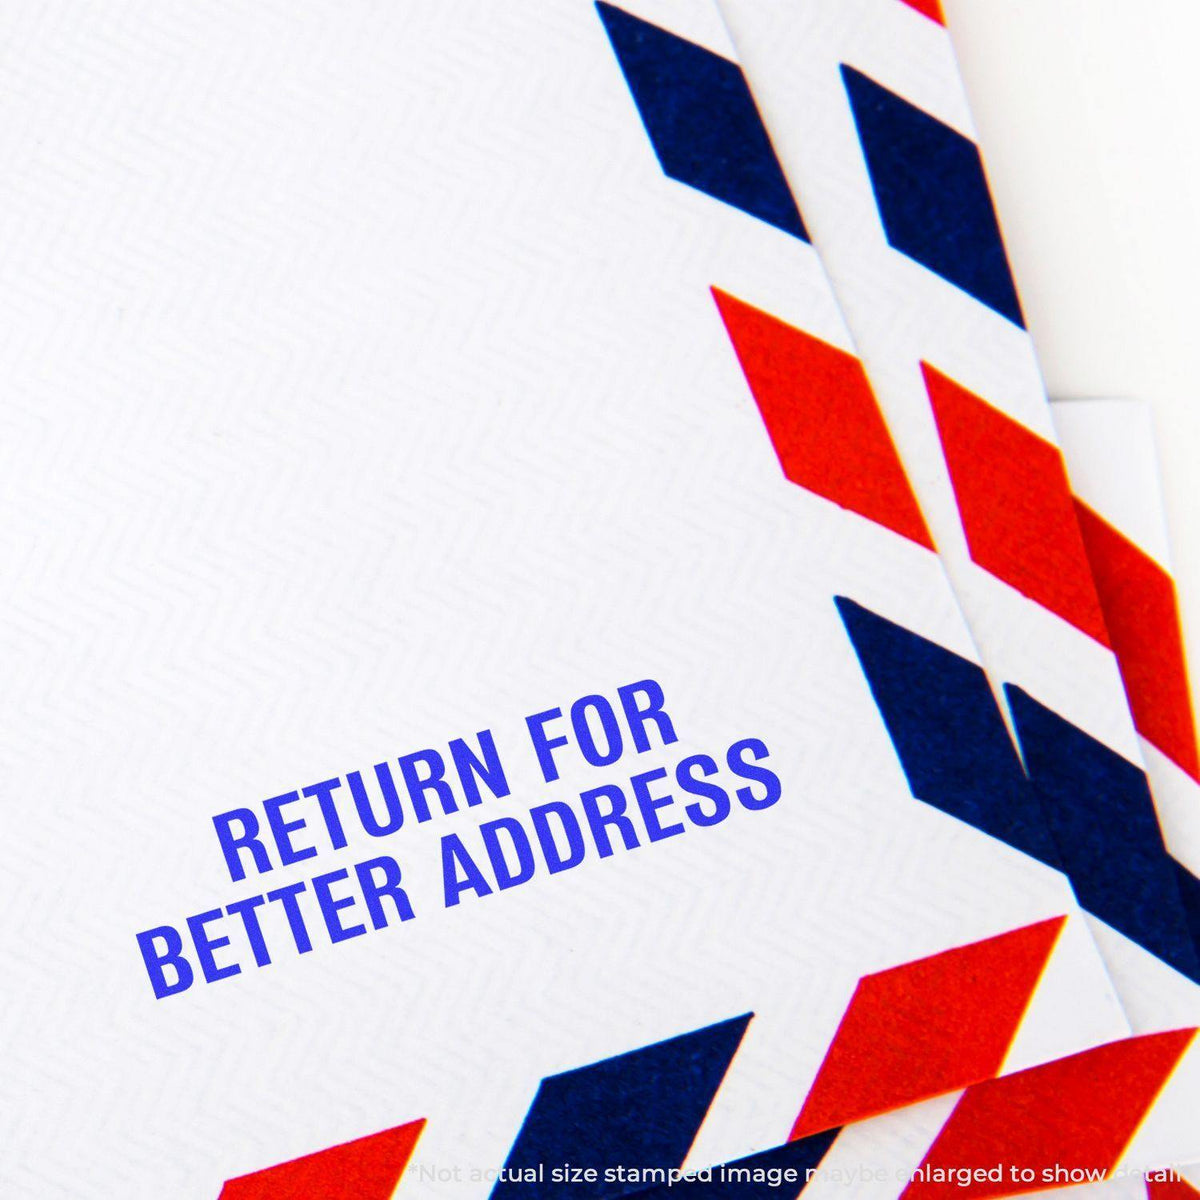 In Use Slim Pre-Inked Return for Better Address Stamp Image